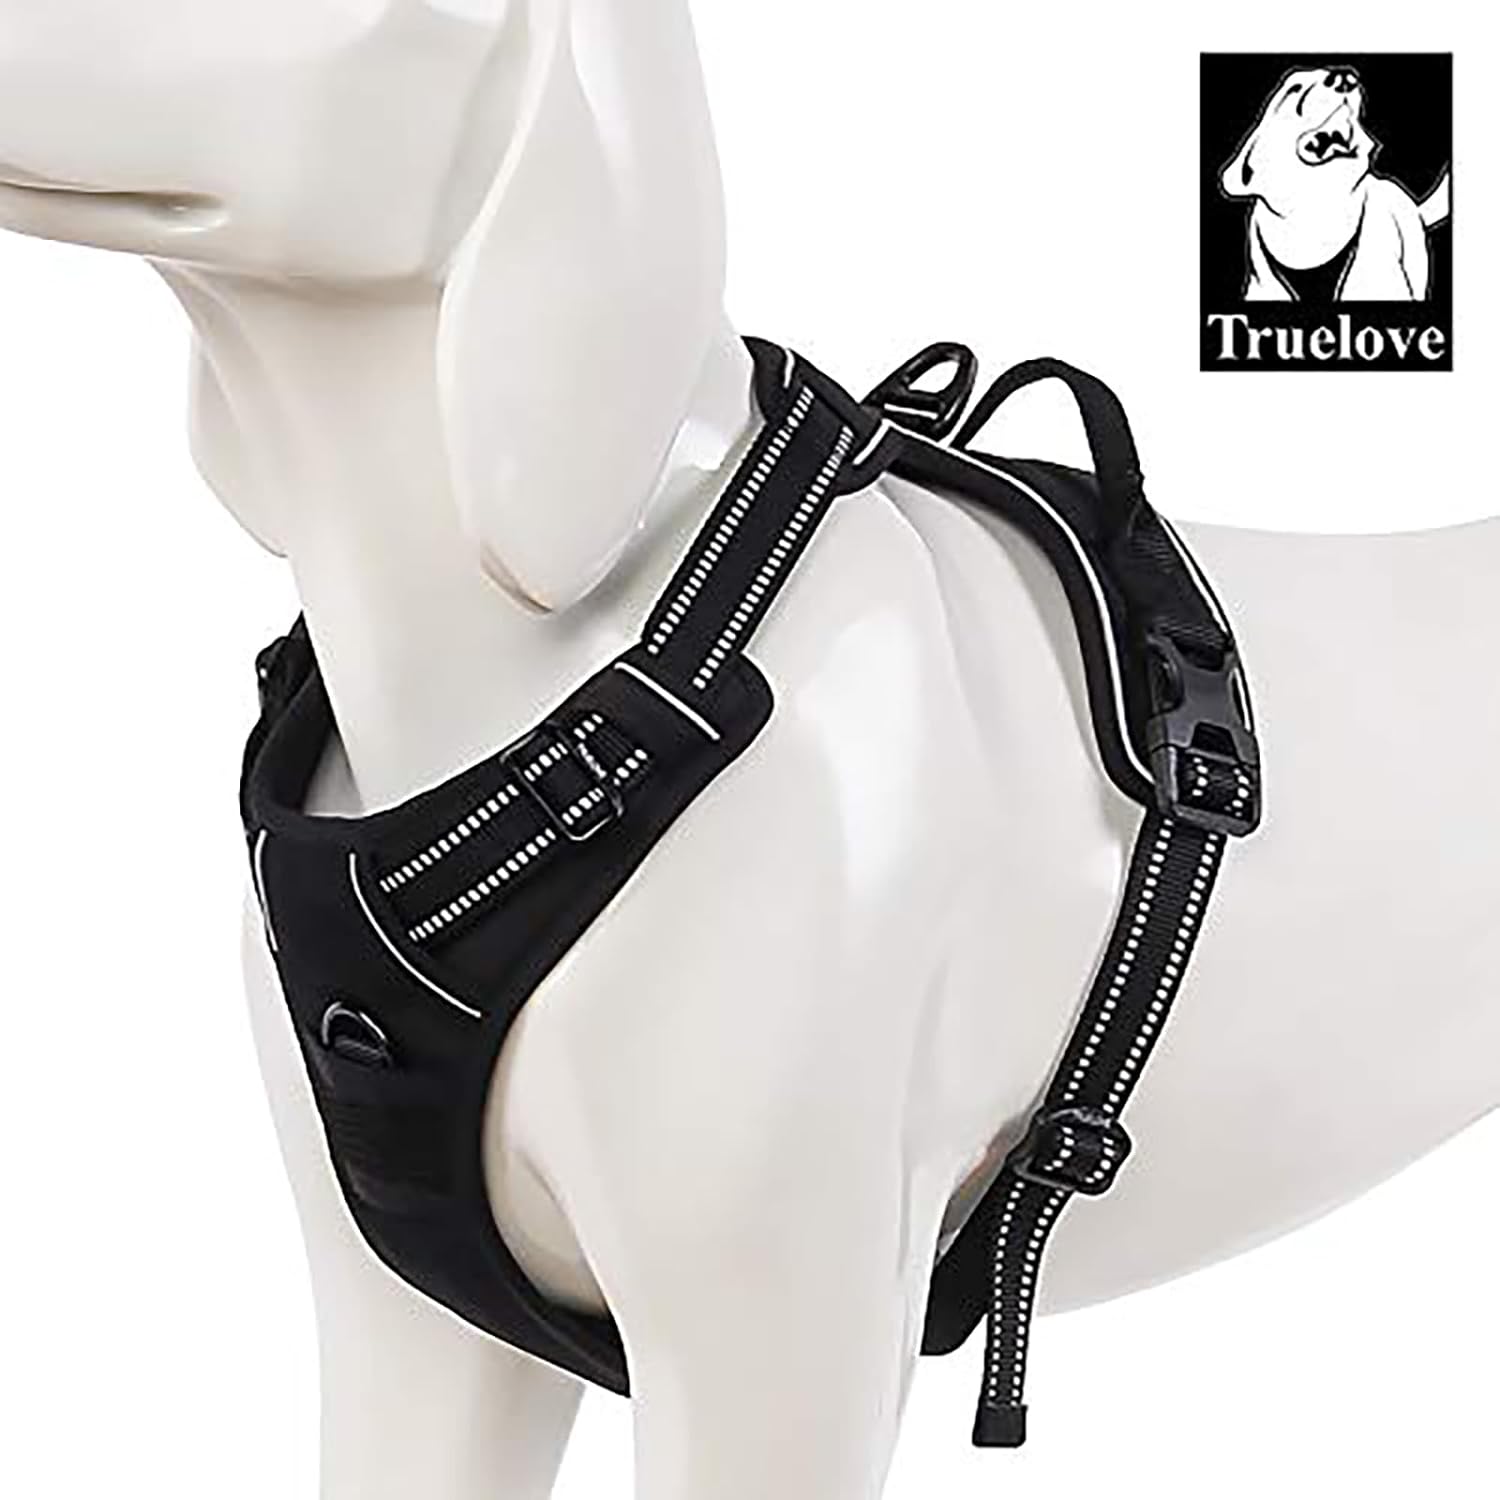 TRUE LOVE Adjustable No-Pull Dog Harness Reflective Pup Vest Harnesses Comfortable Control Brilliant Colors Truelove TLH5651(Gray,XL)